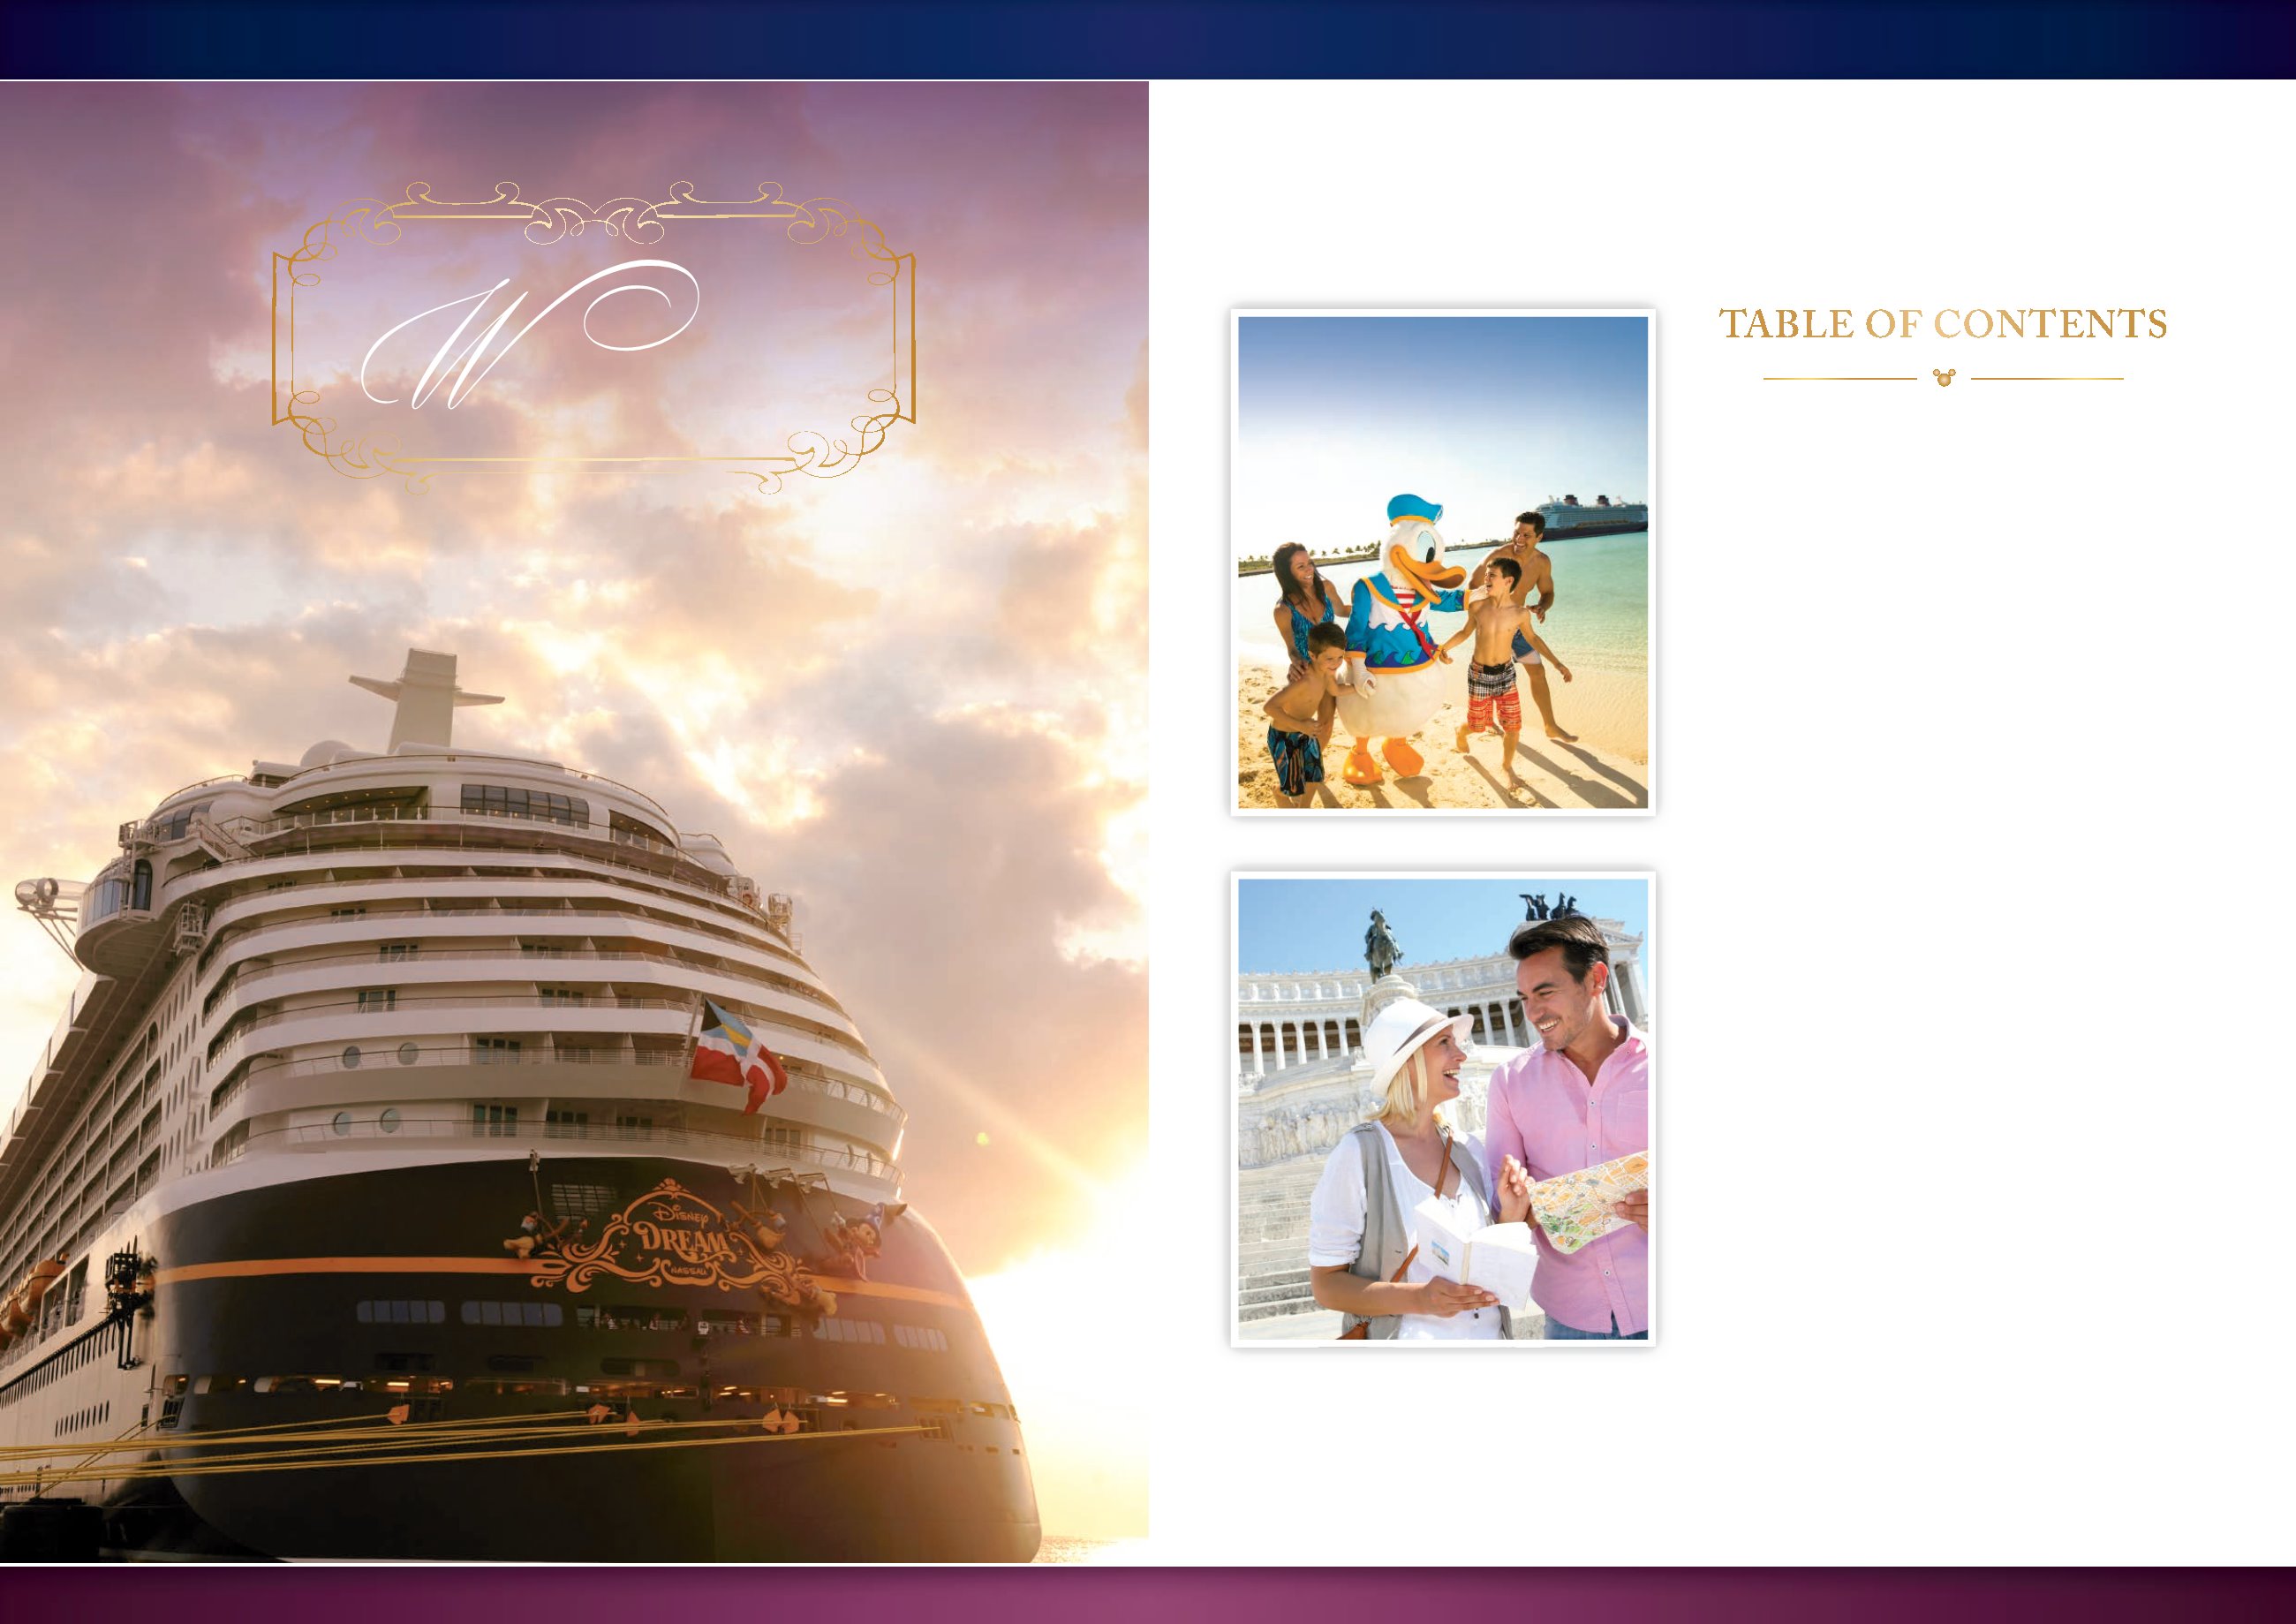 disney cruise line e brochure